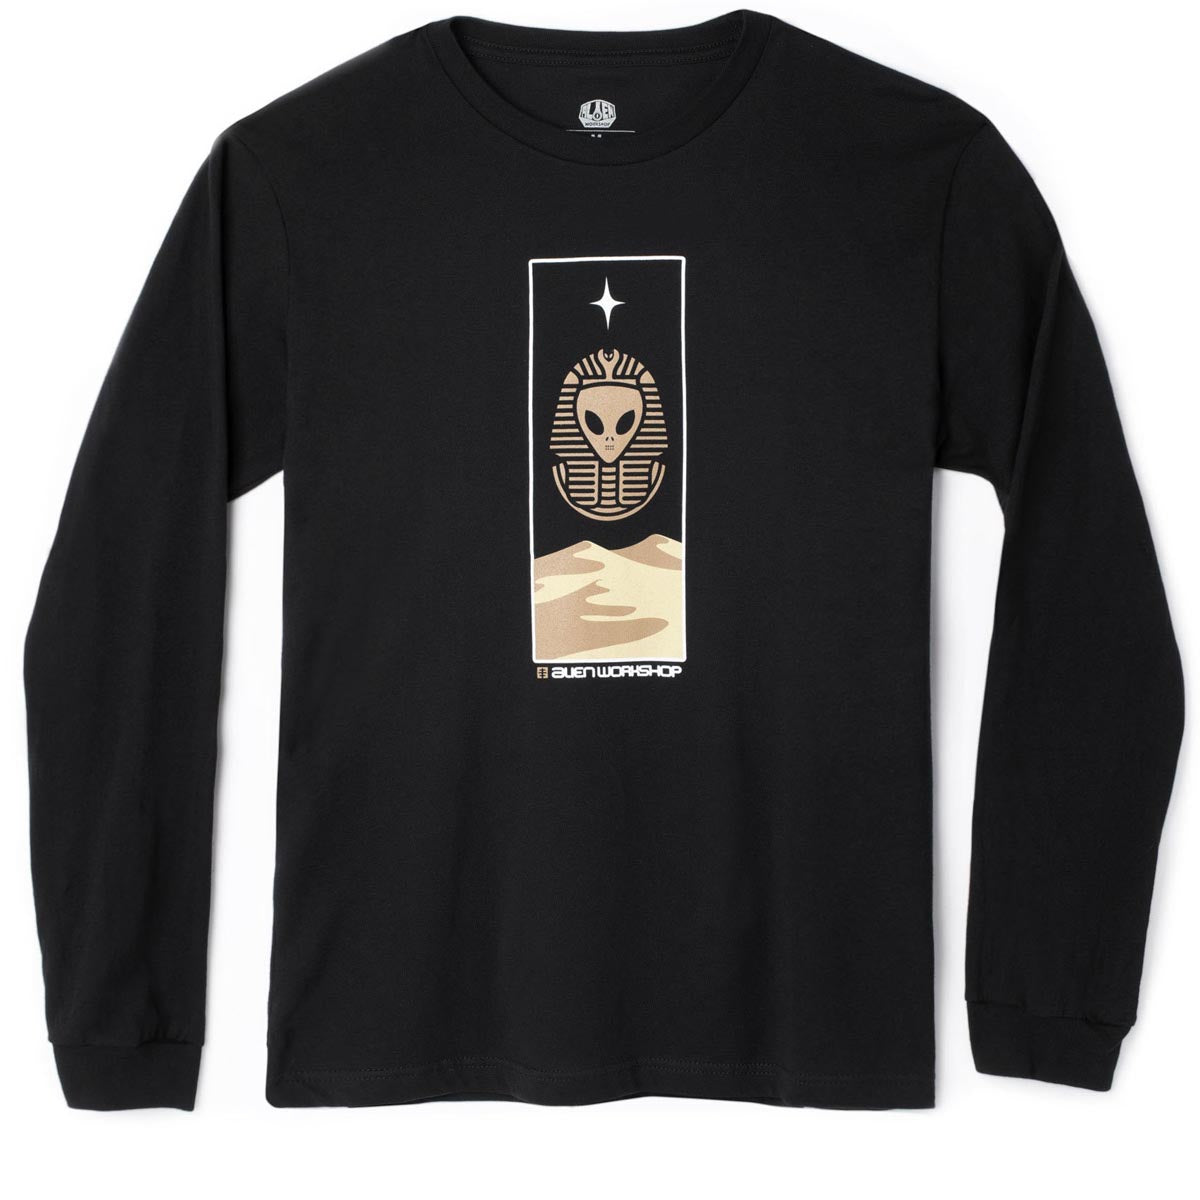 Alien Workshop Theurgy Long Sleeve T-Shirt - Black image 1